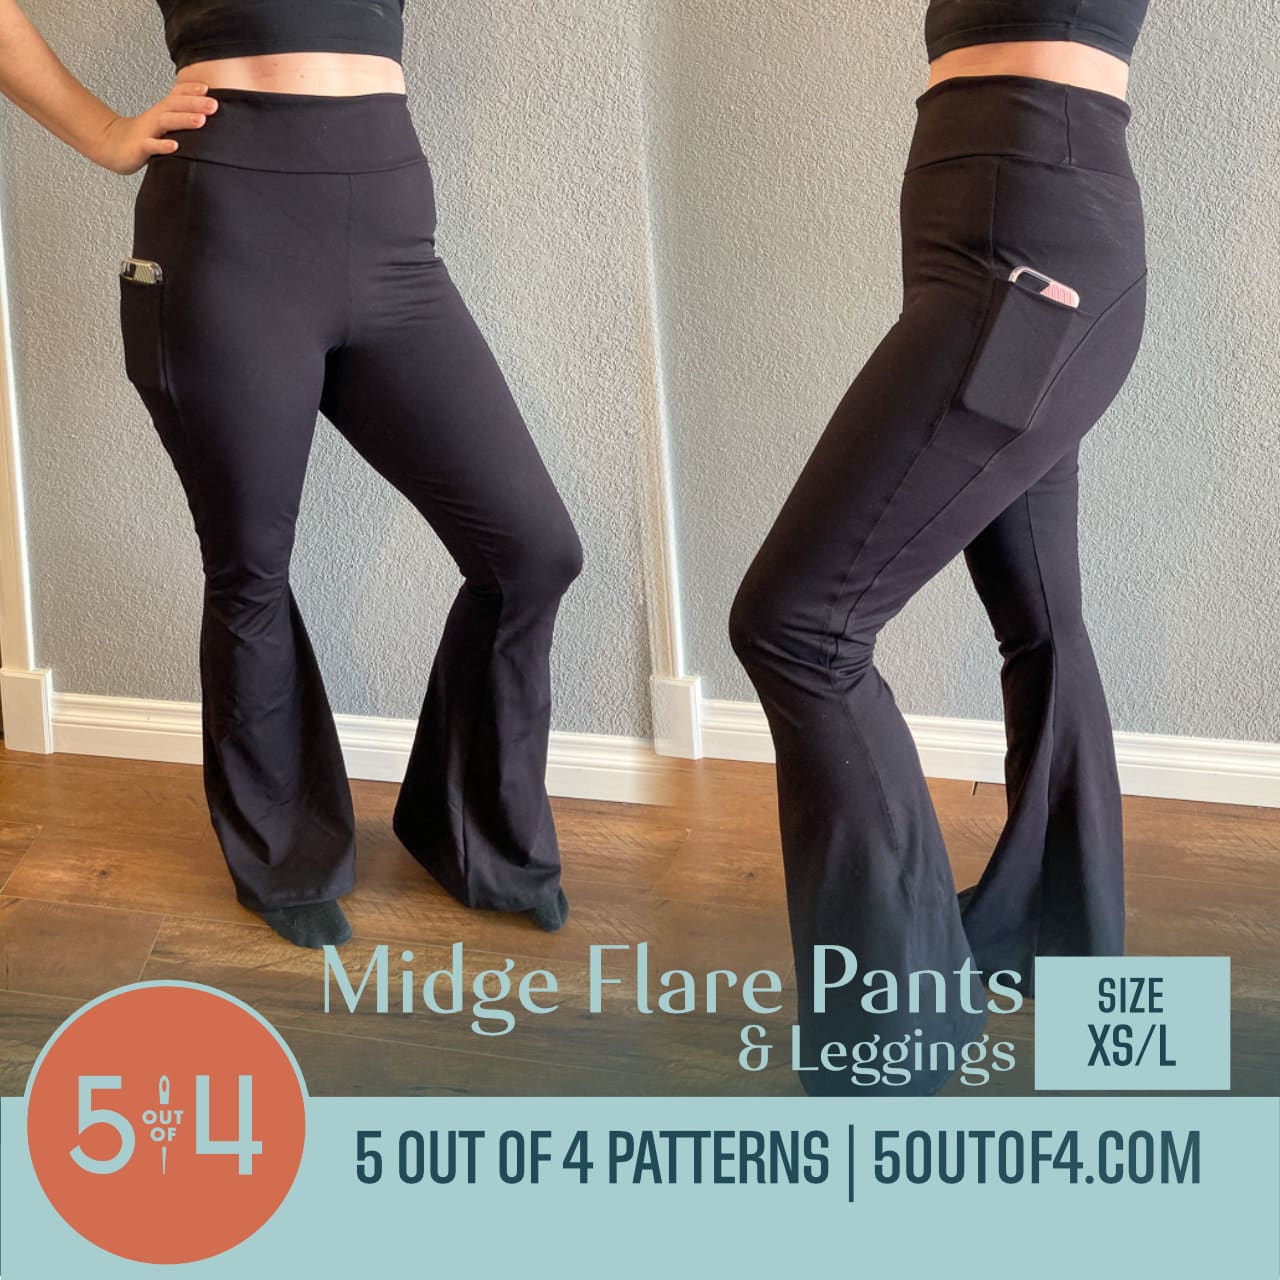 https://5outof4.com/wp-content/uploads/2023/02/Midge-Flare-Pants-and-Leggings-Size-XSL-2.jpg